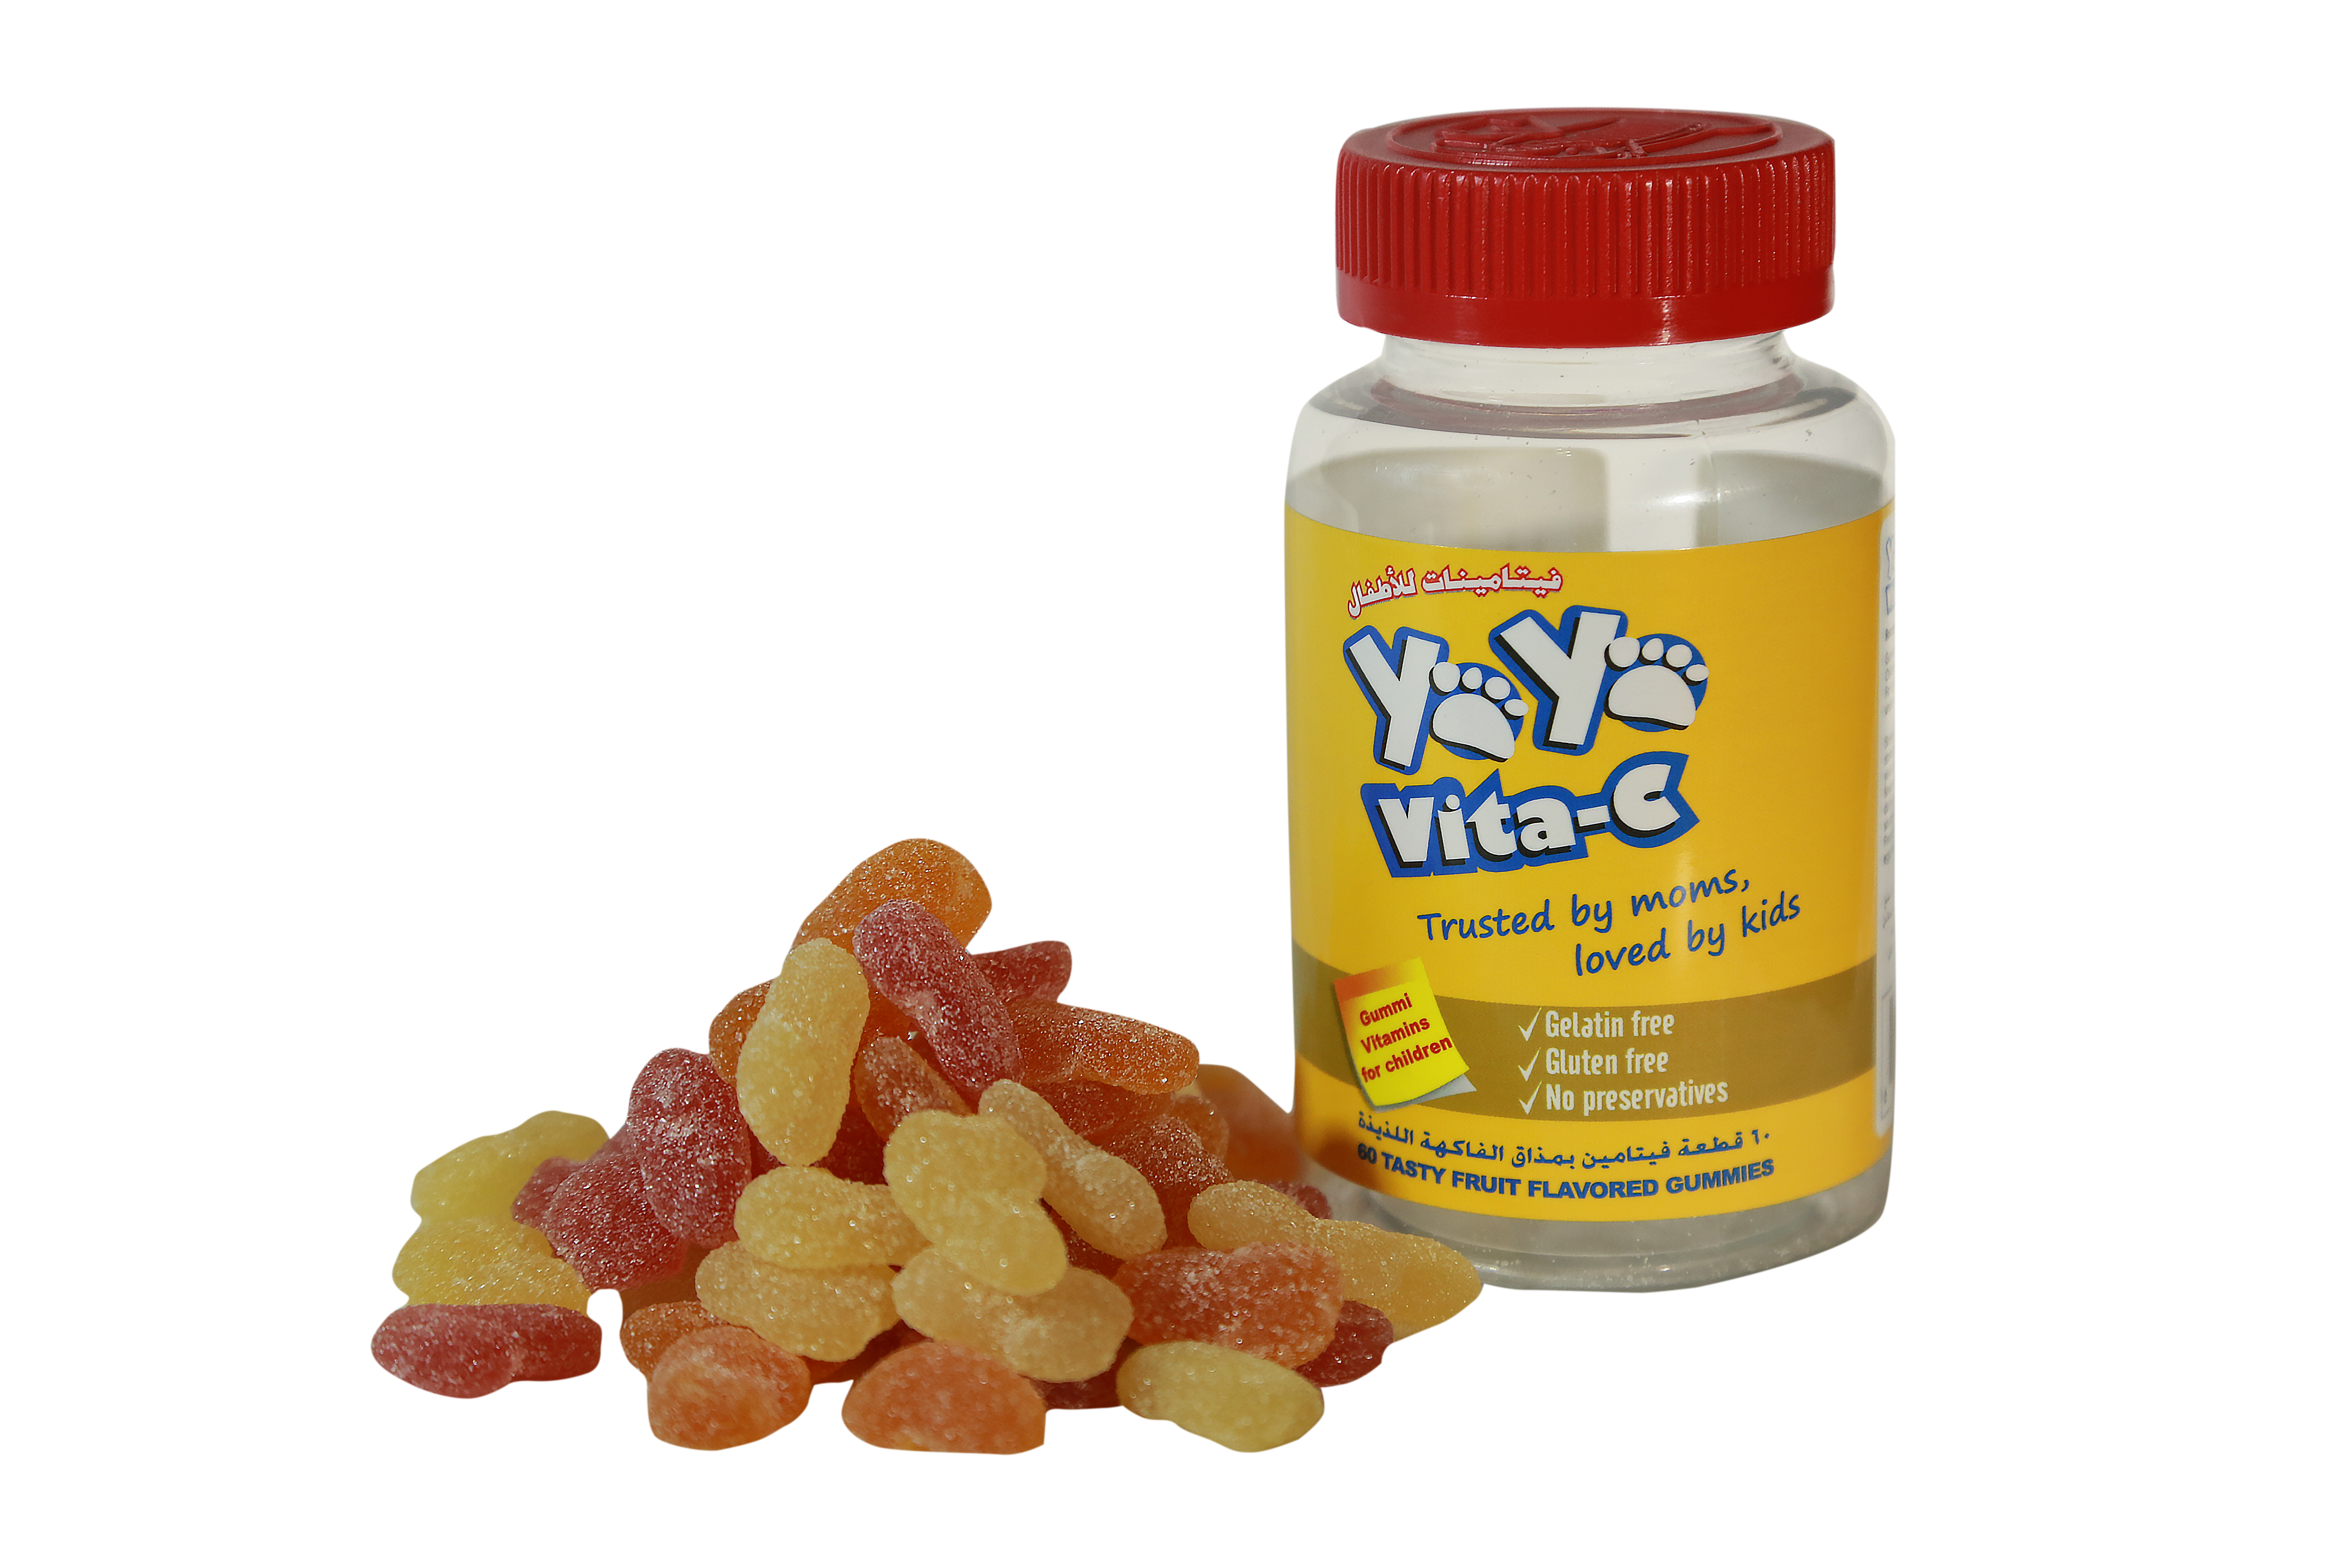 Yaya vitamin c for children in dubai - uae